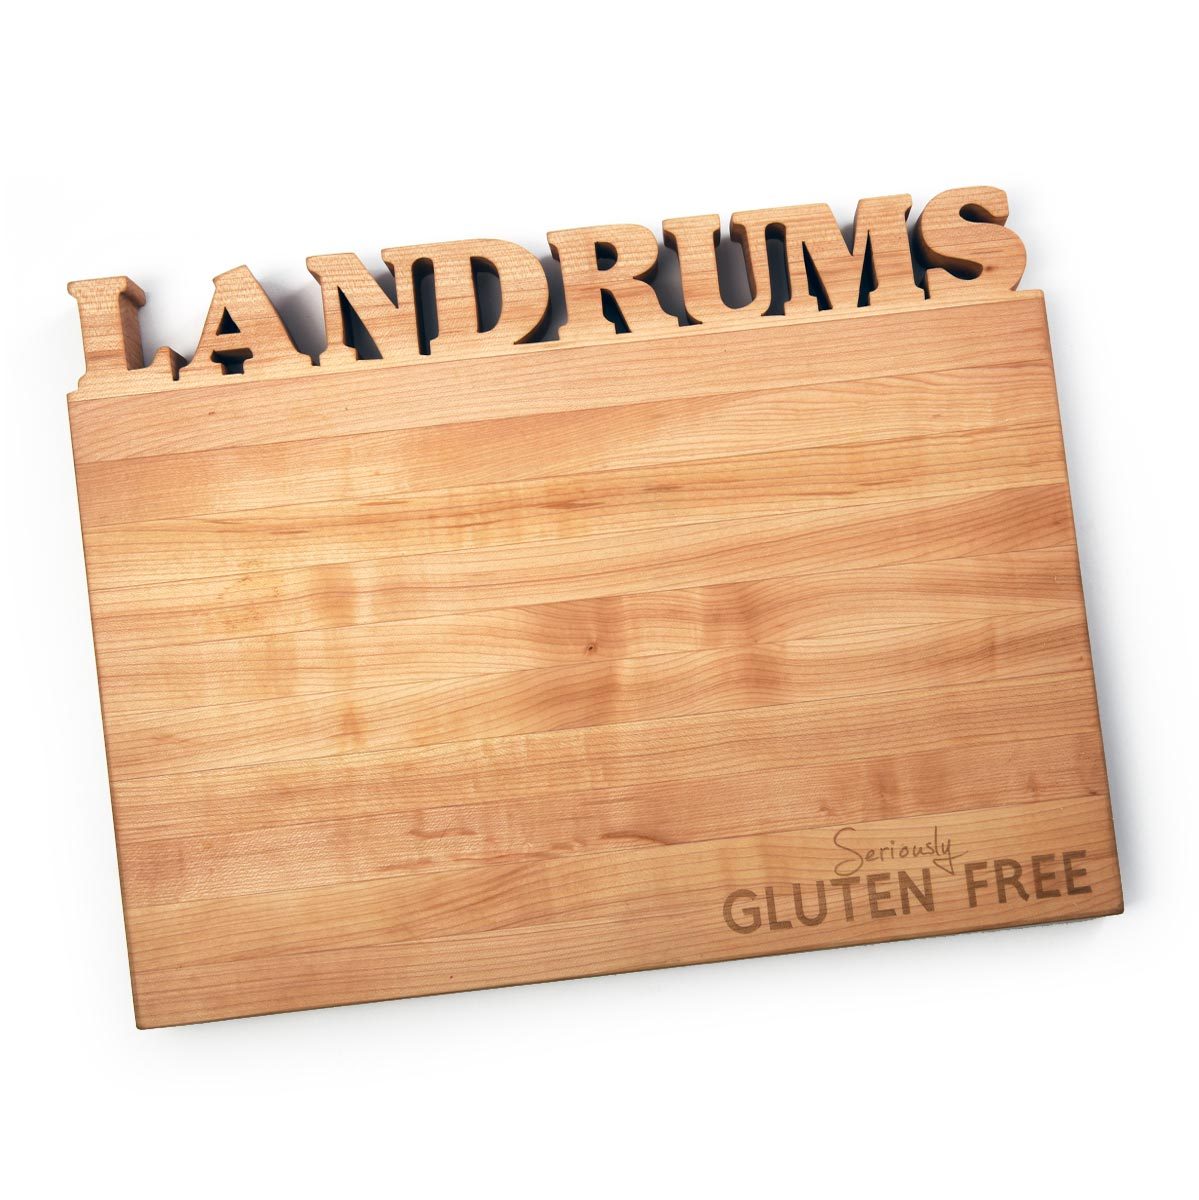 gluten free products - custom cutting boards